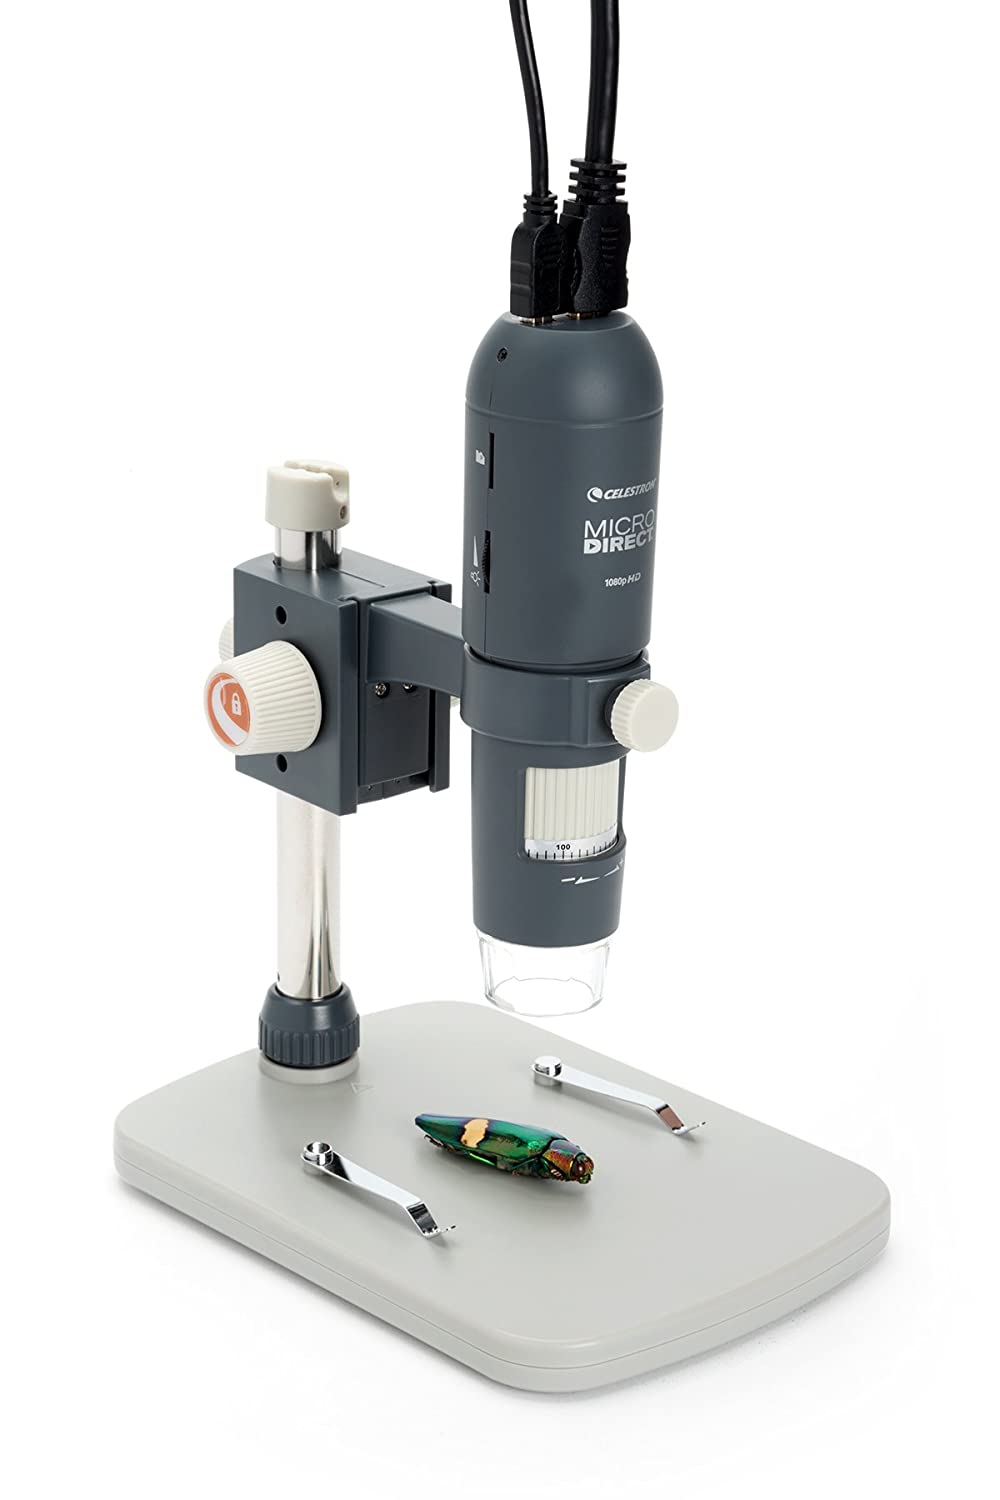 Celestron MicroDirect 1080p HD Handheld Digital Microscope - The Camerashop